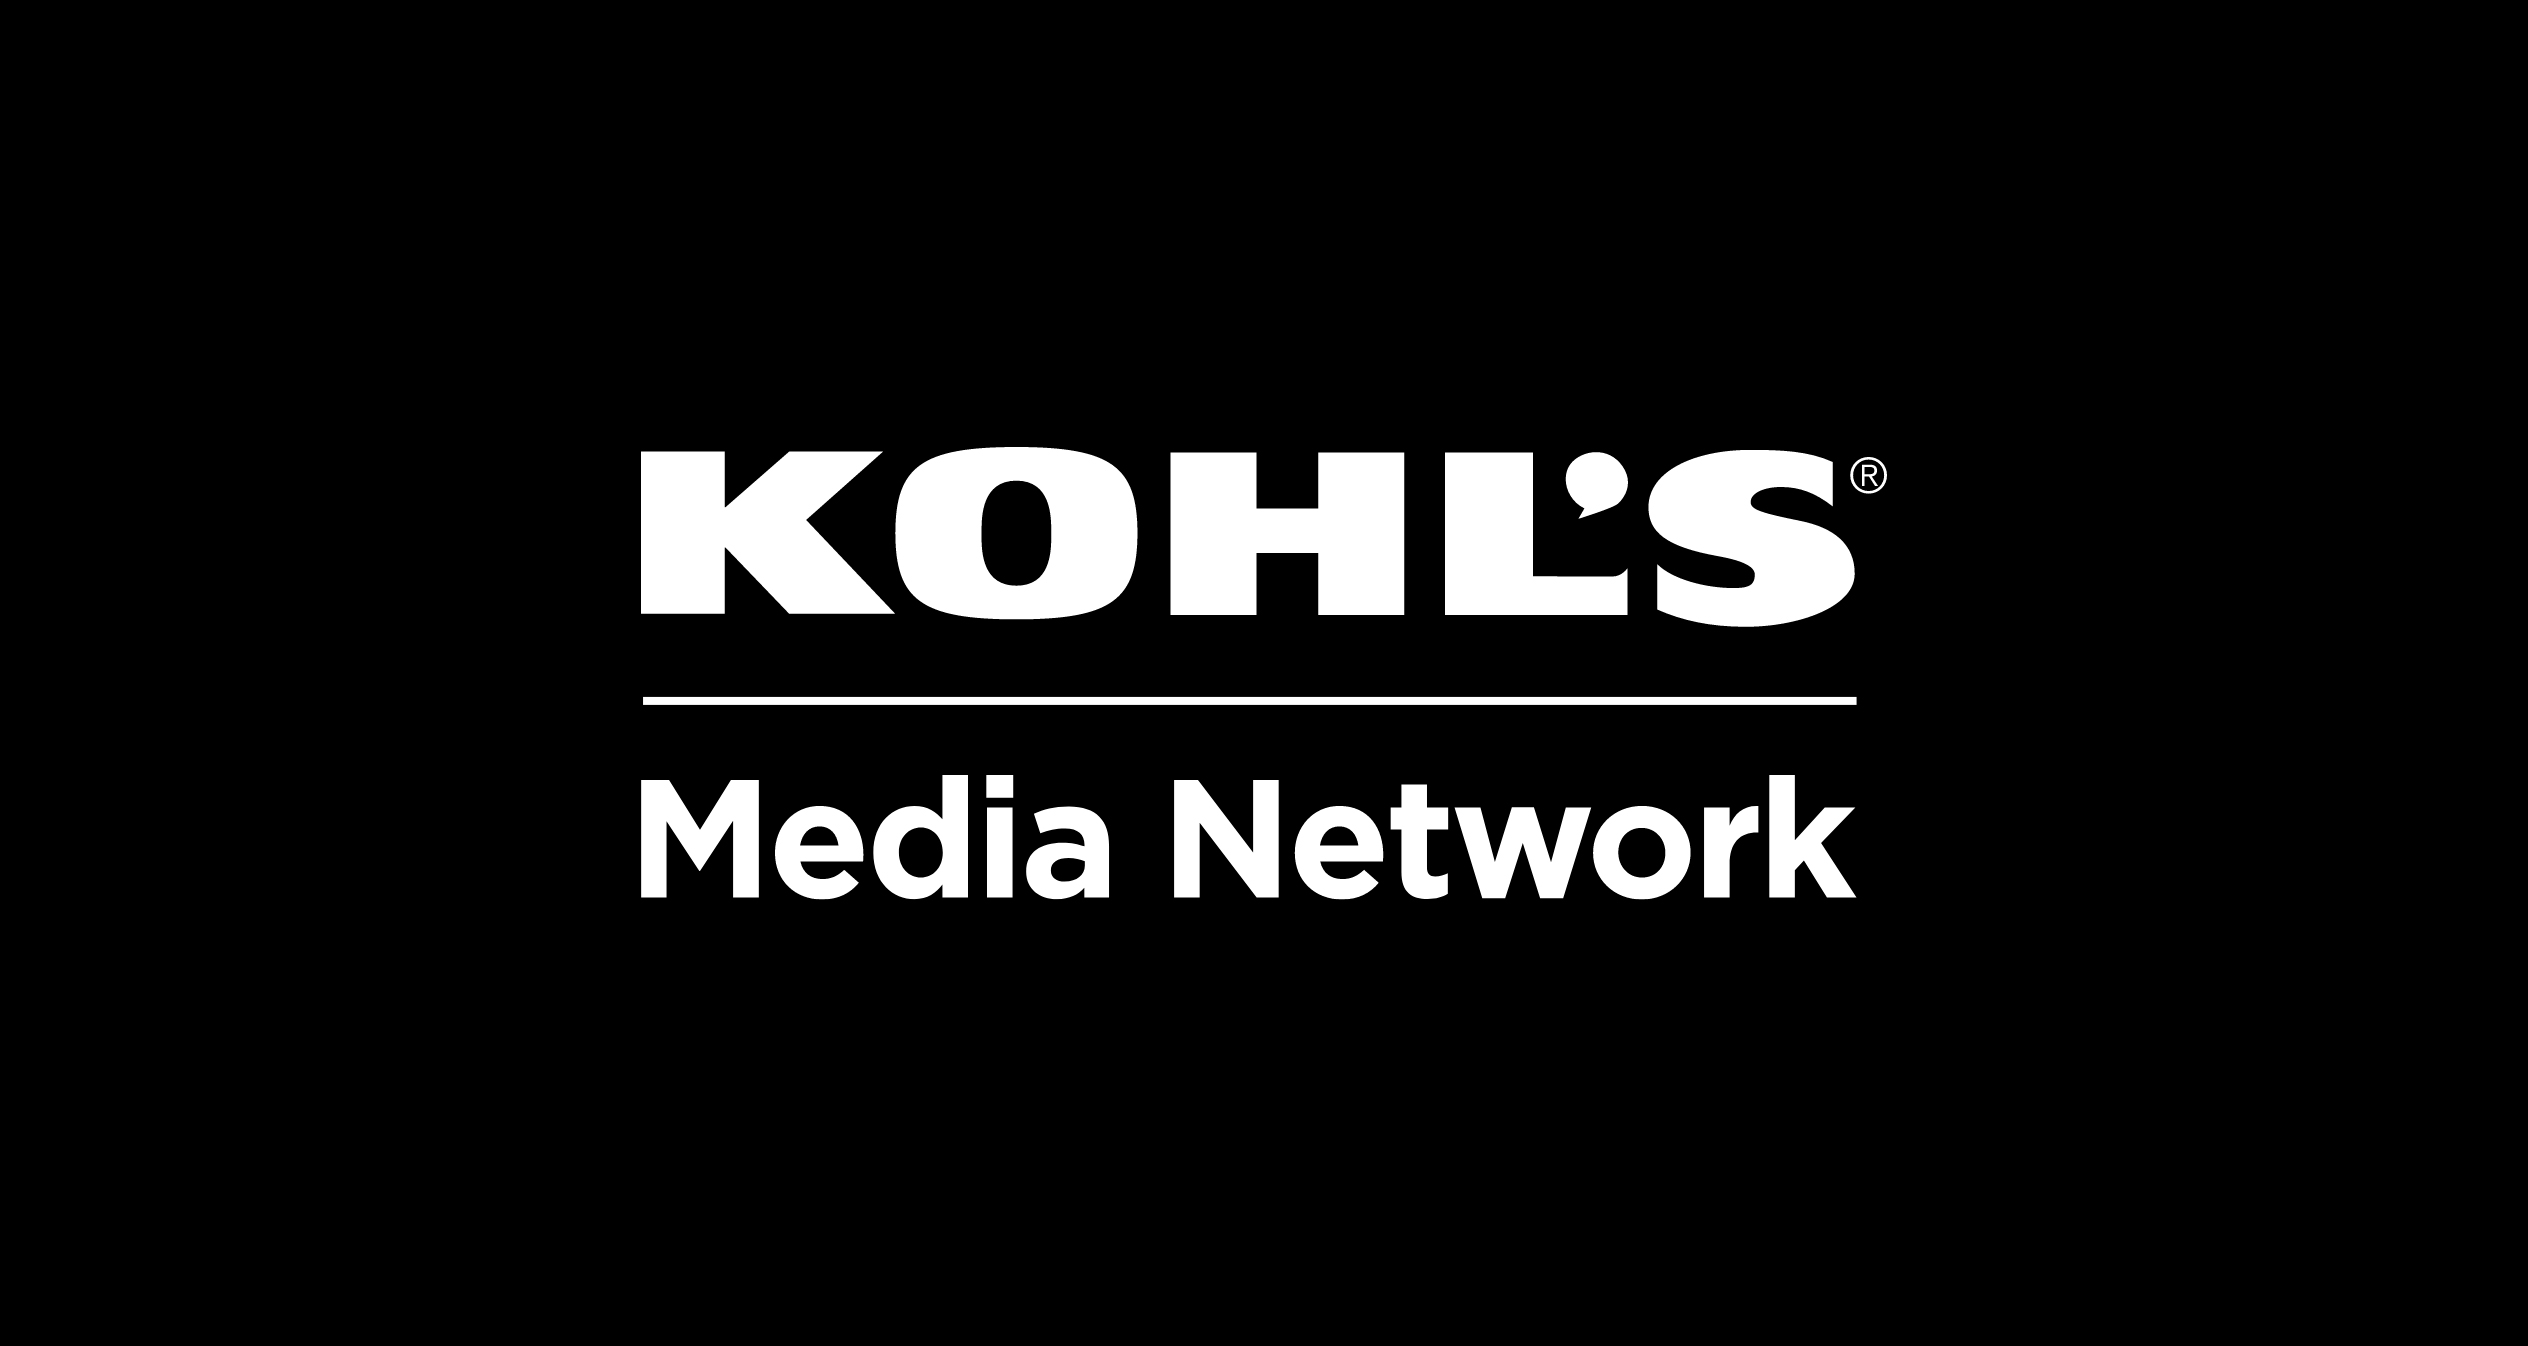 https://corporate.kohls.com/content/dam/kohlscorp/news/2022/july/media/Kohls-Media-Network-logo.jpg/jcr:content/renditions/original